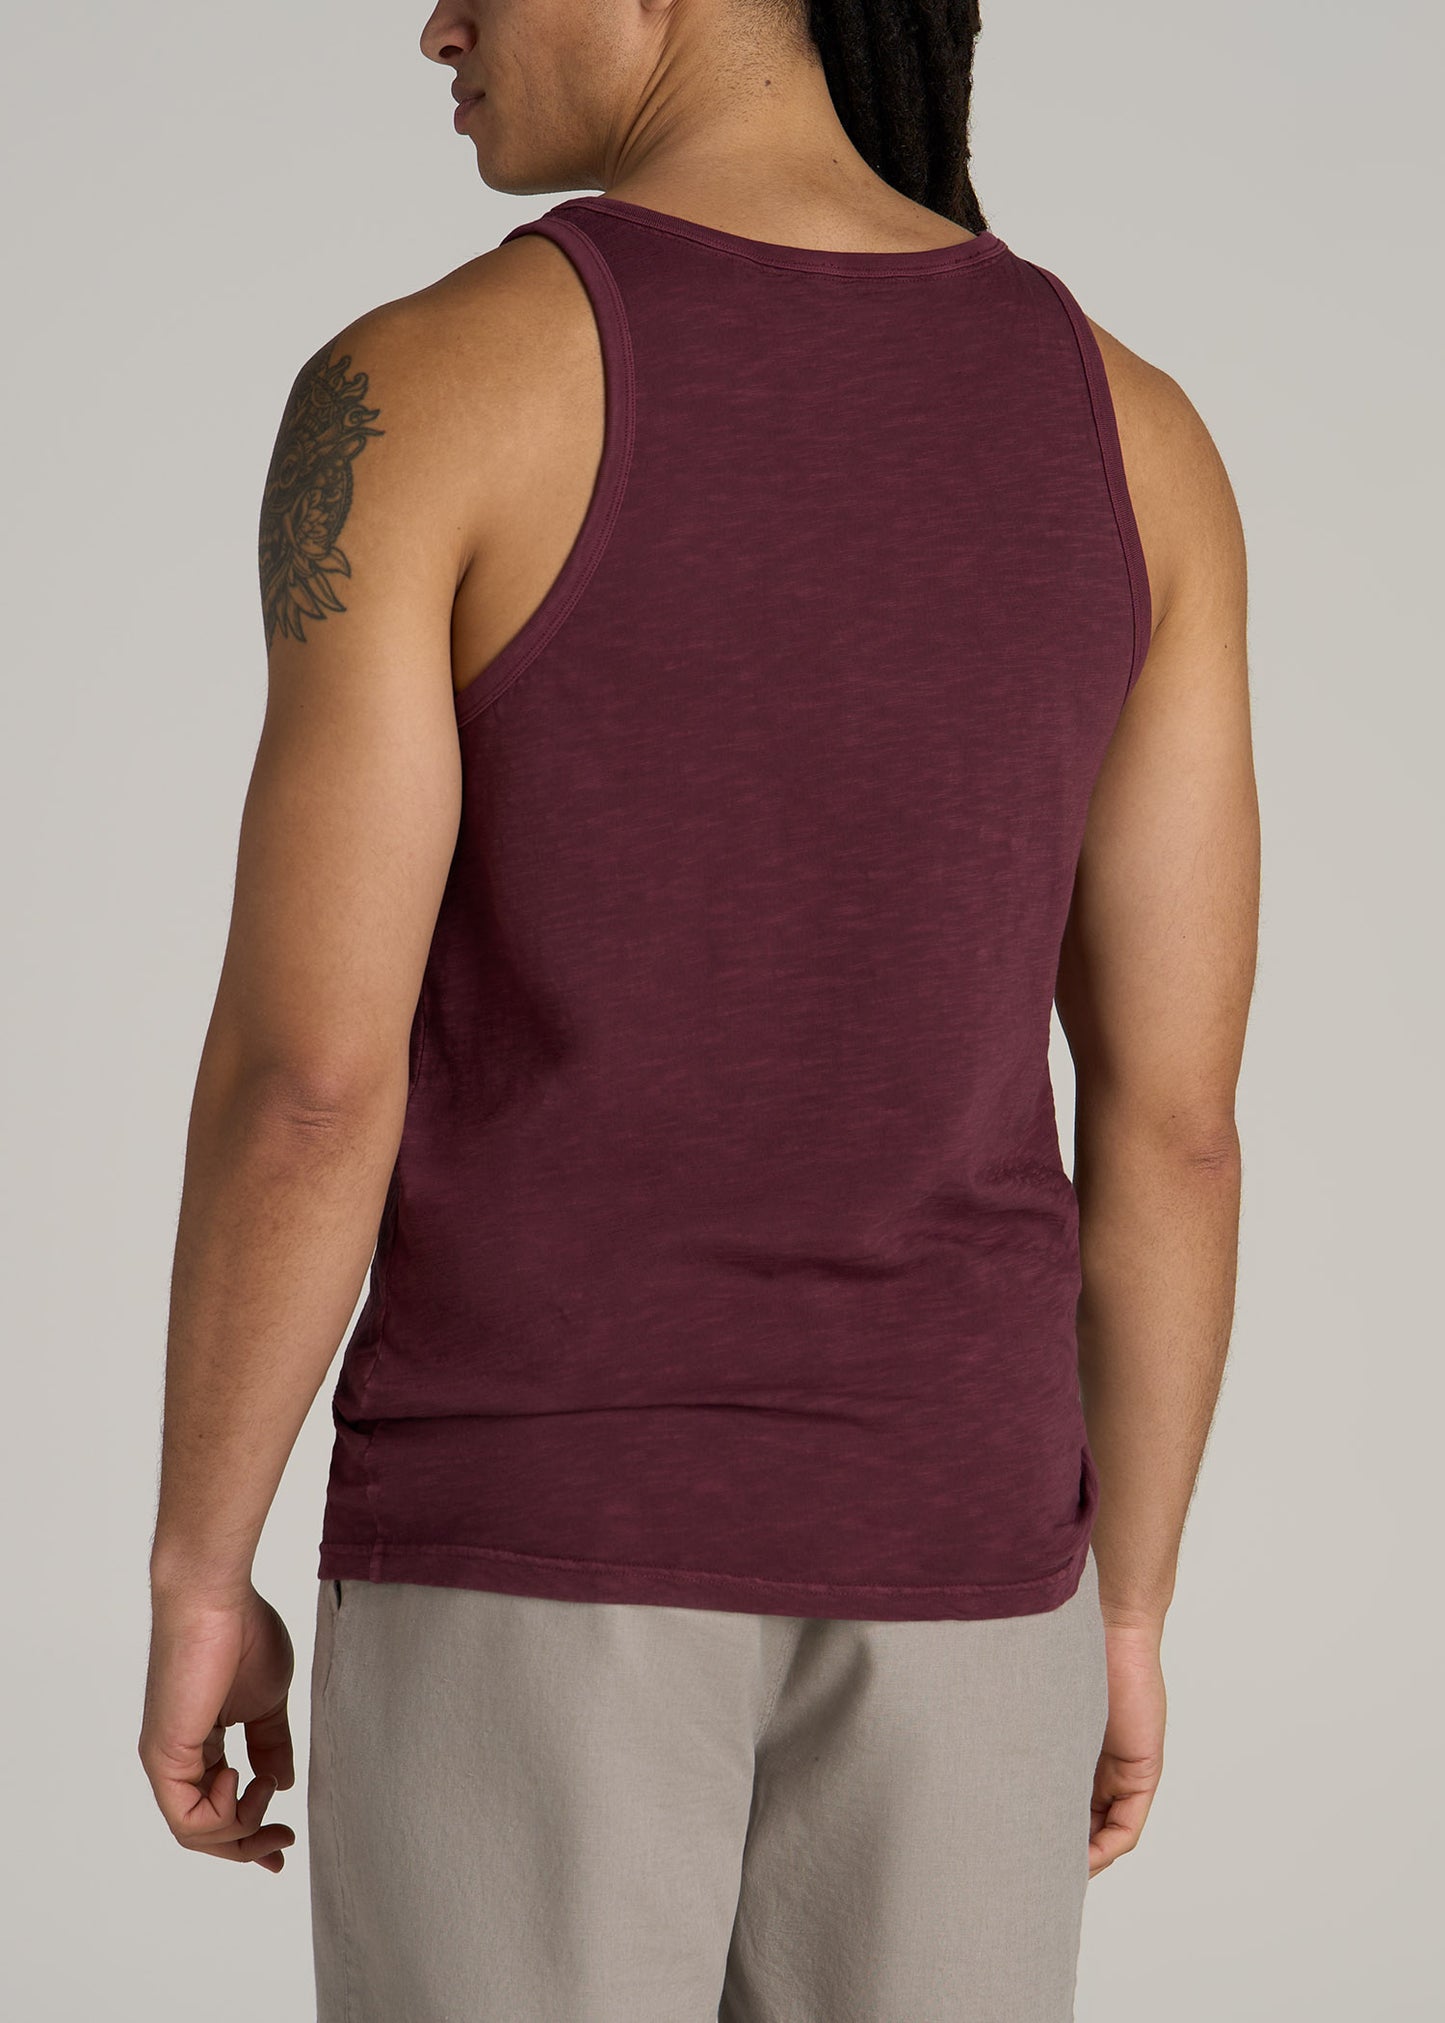 Garment Dyed Slub Pocket Tall Men's Tank Top in Dark Cherry